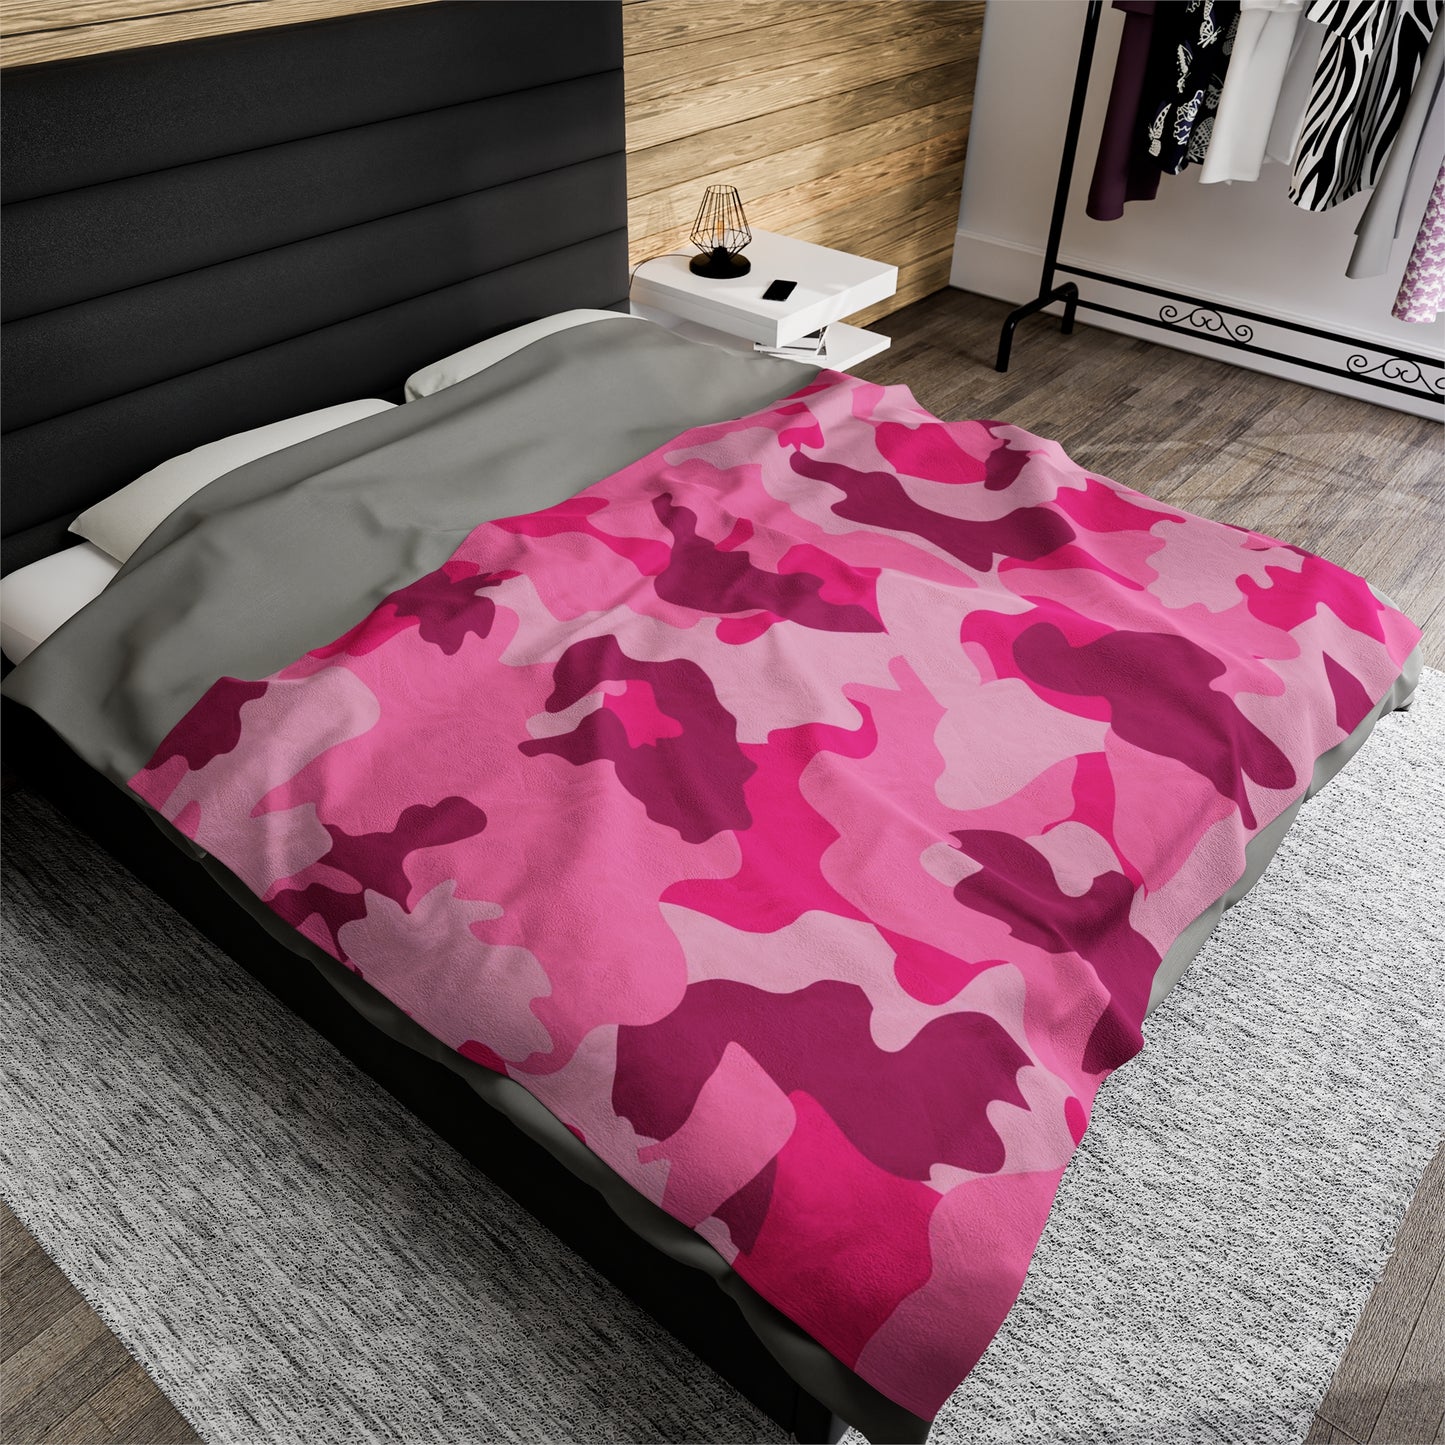 Pink Camouflage Velveteen Plush Blanket, Cozy Warm Throw Blanket